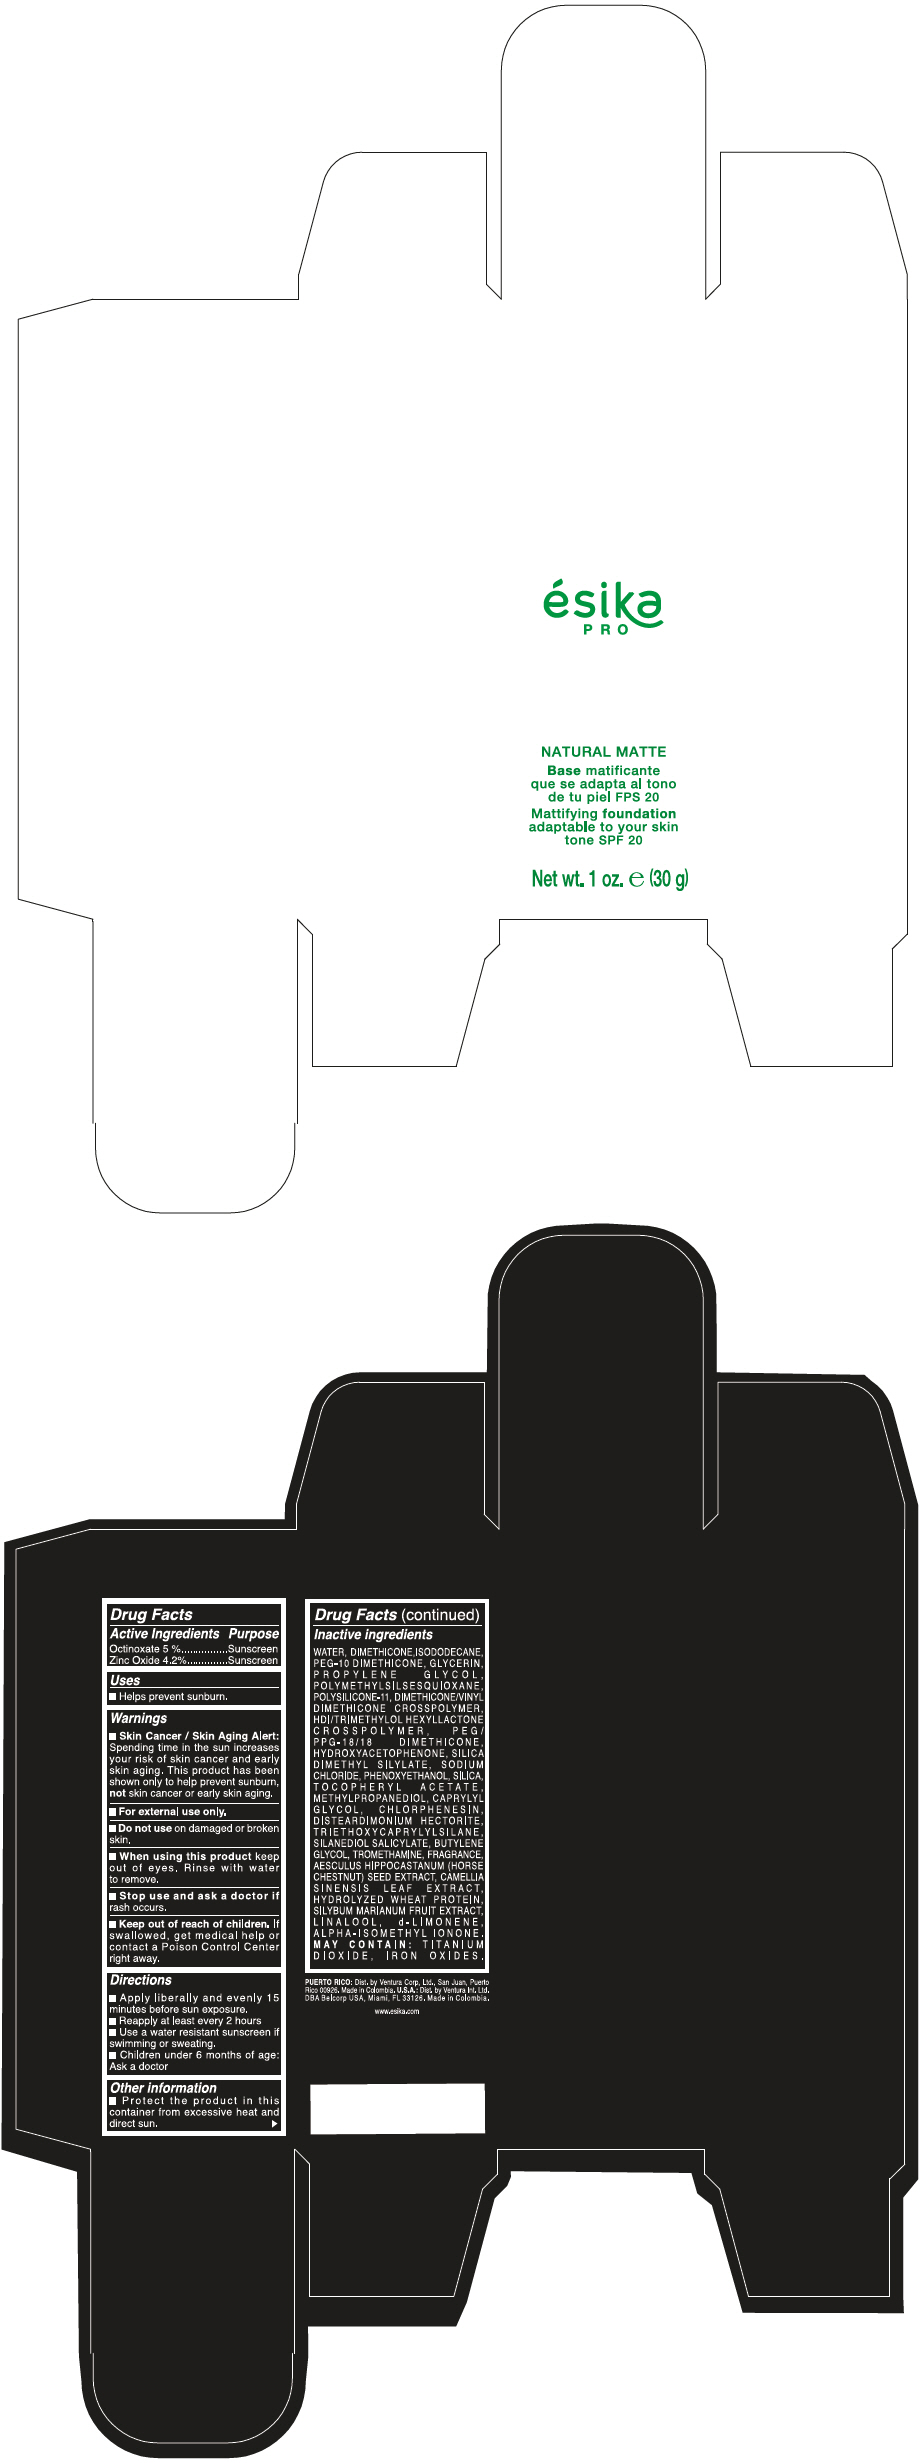 PRINCIPAL DISPLAY PANEL - 30 g Bottle Box - Medio5/Beige